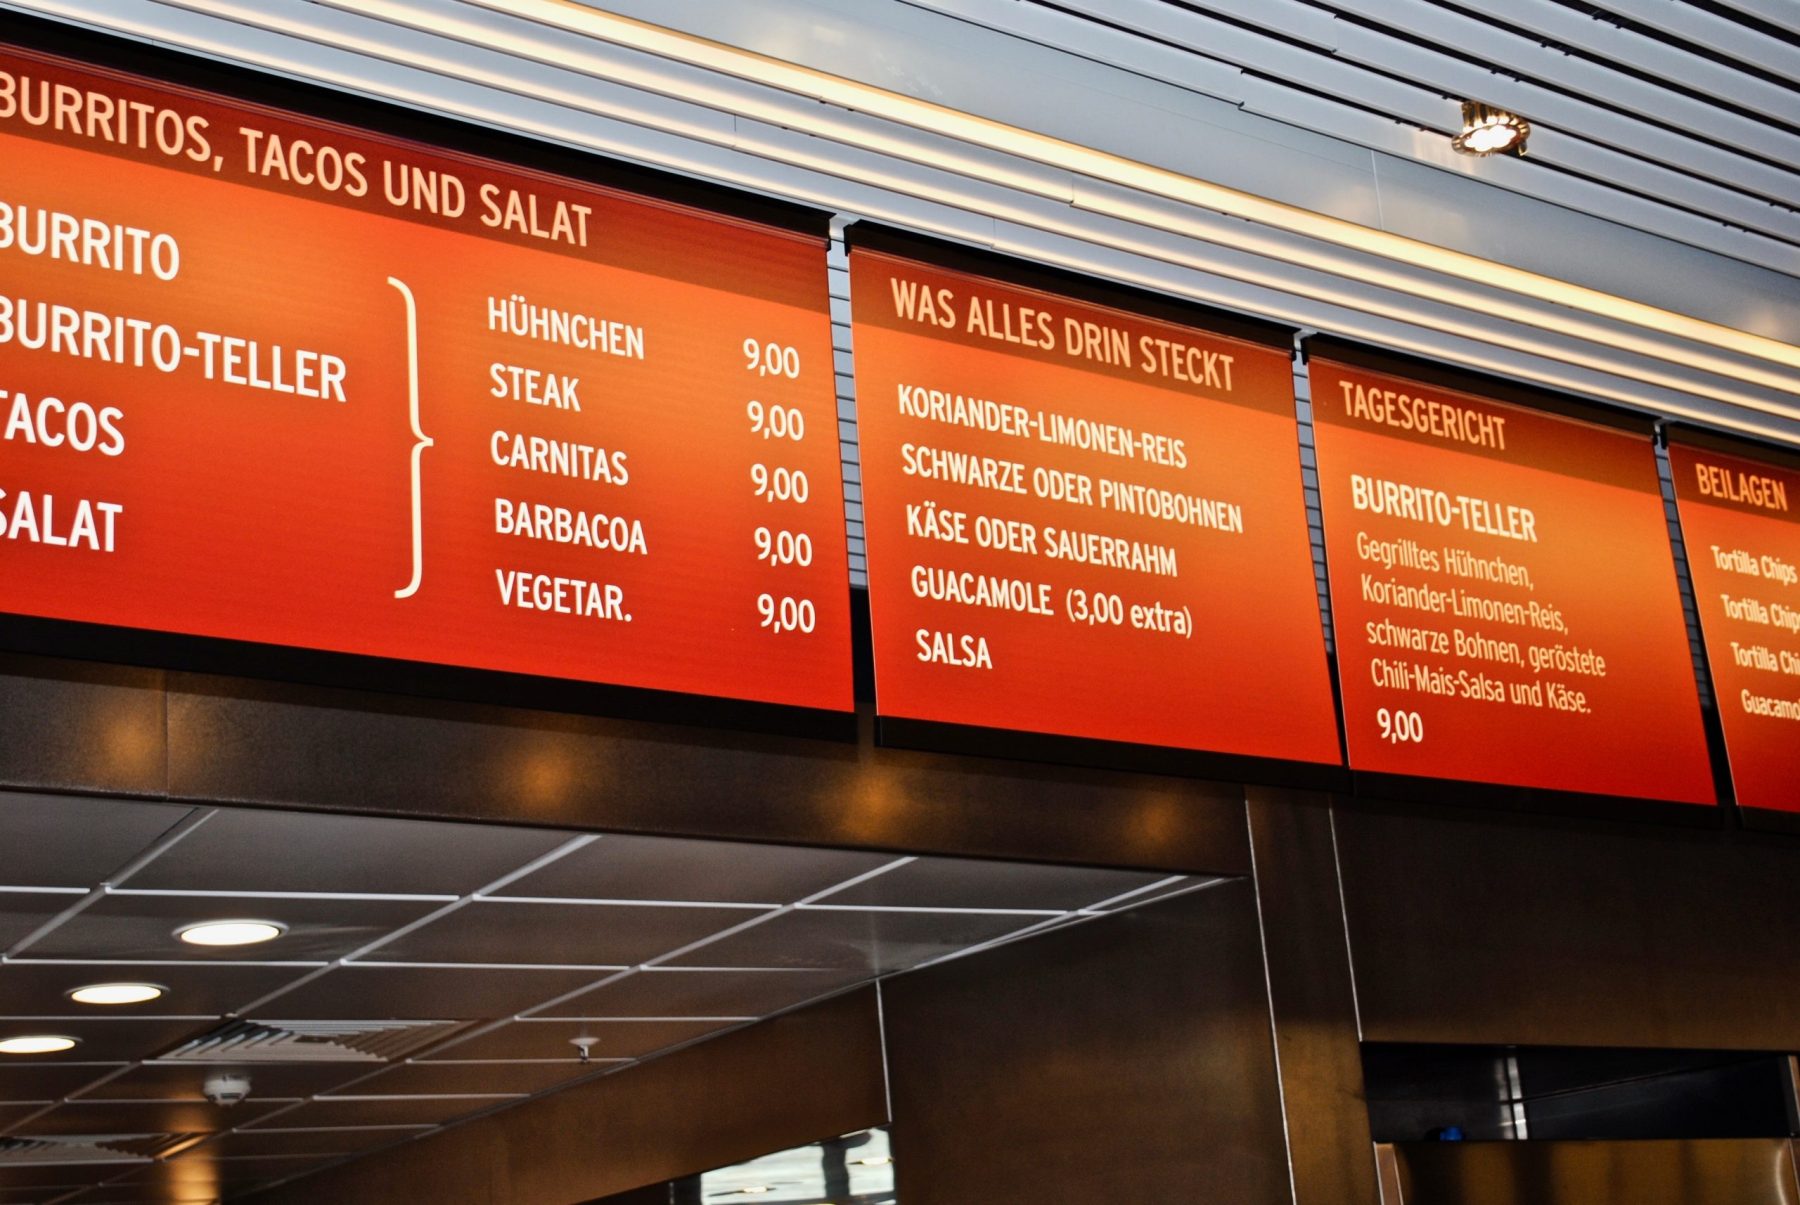 Restaurant sign, menu board showing Mexican food menu clear signs